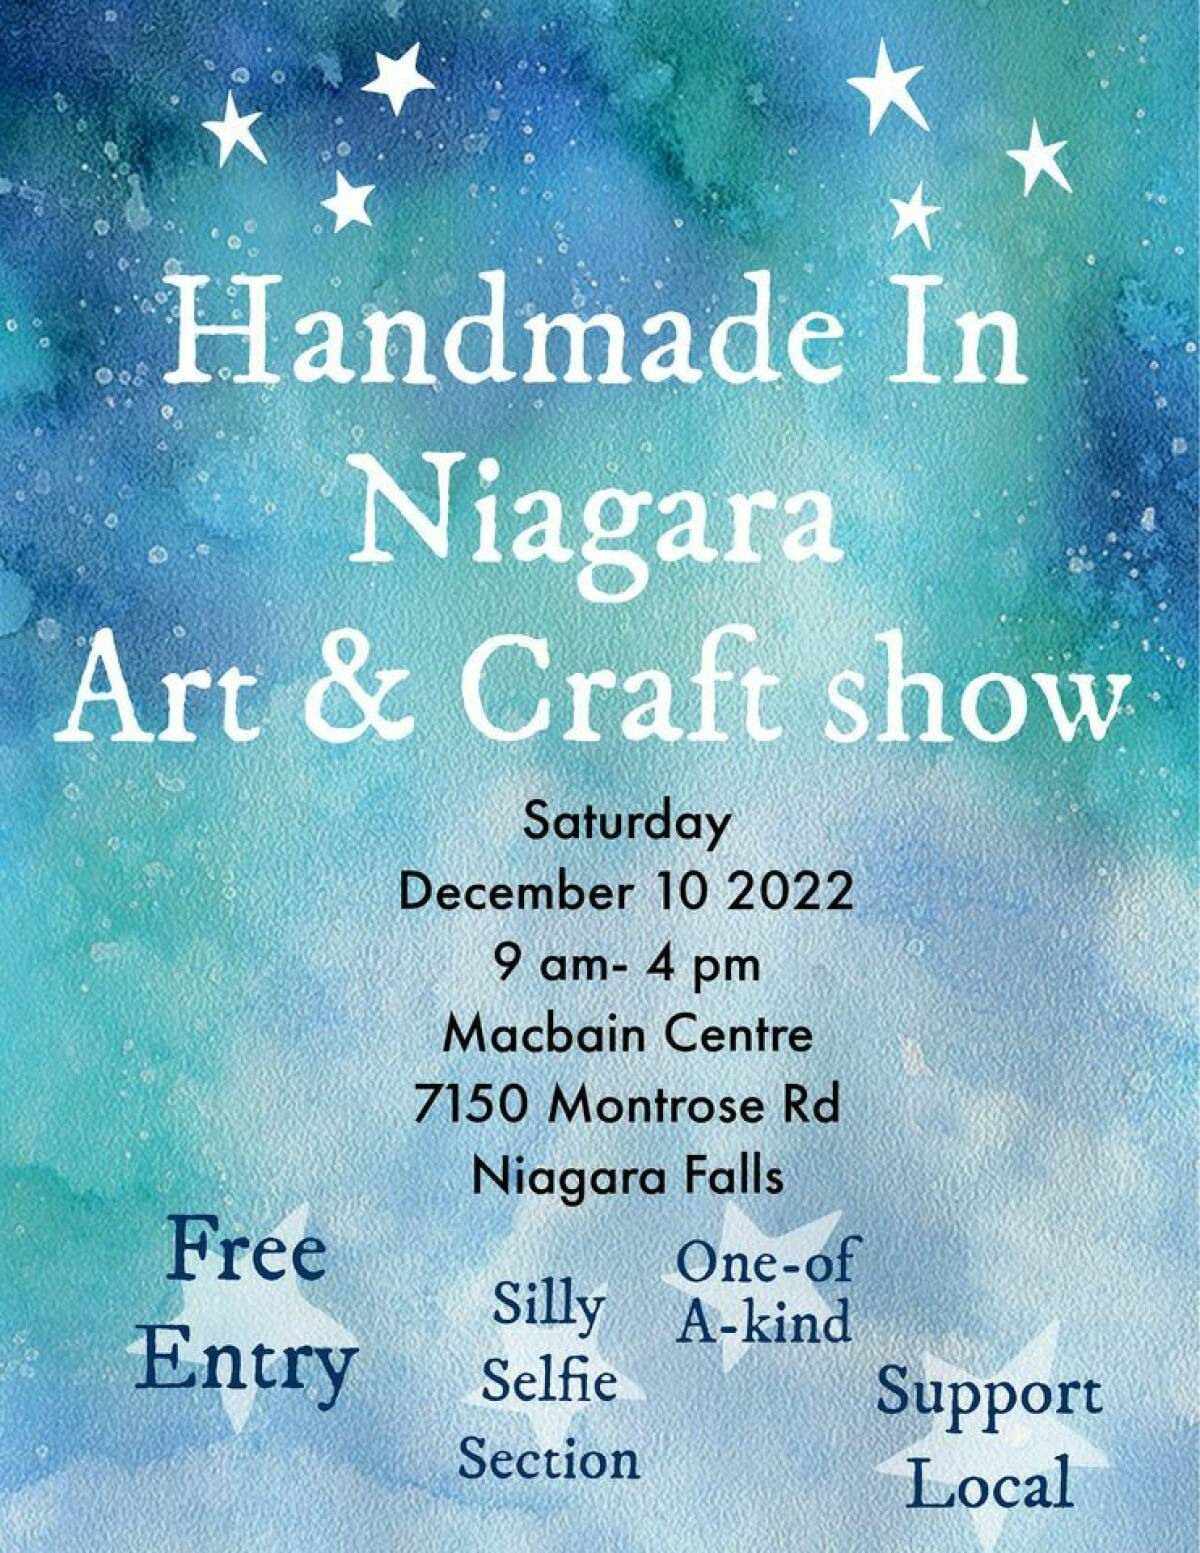 Handmade in Niagara Art & Craft Show